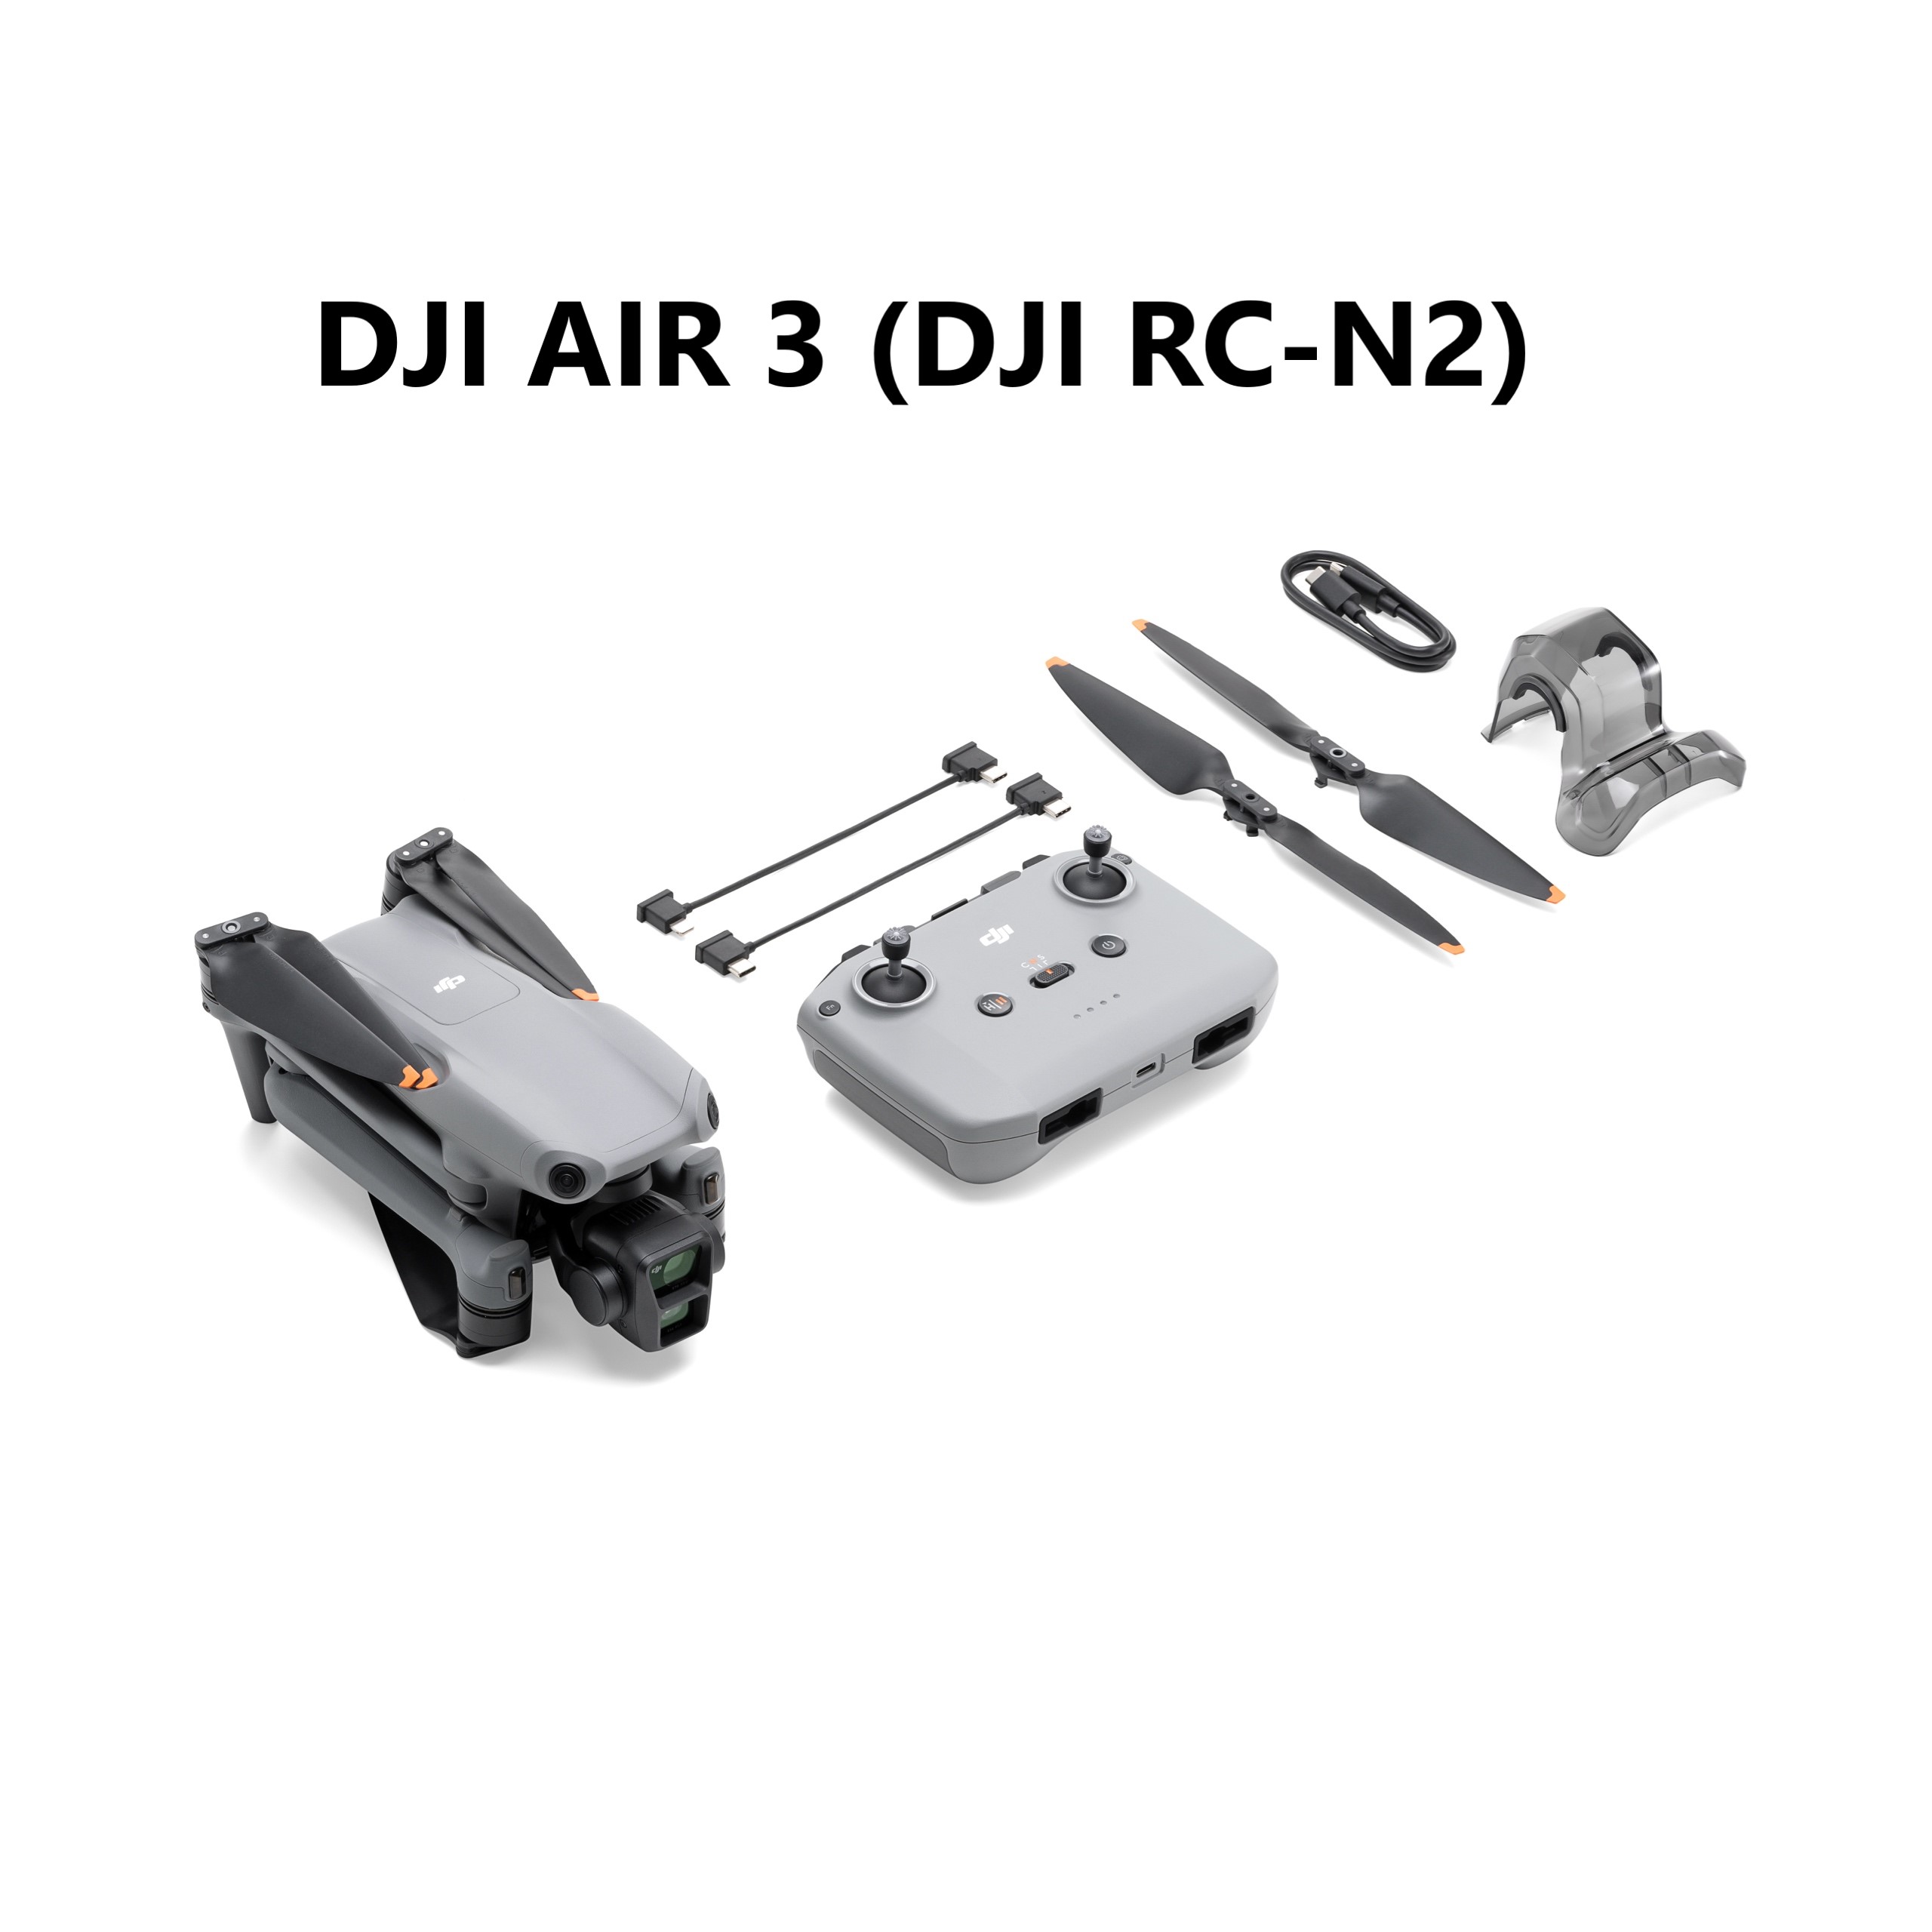 DJI AIR 3 (DJI RC-N2) PACK